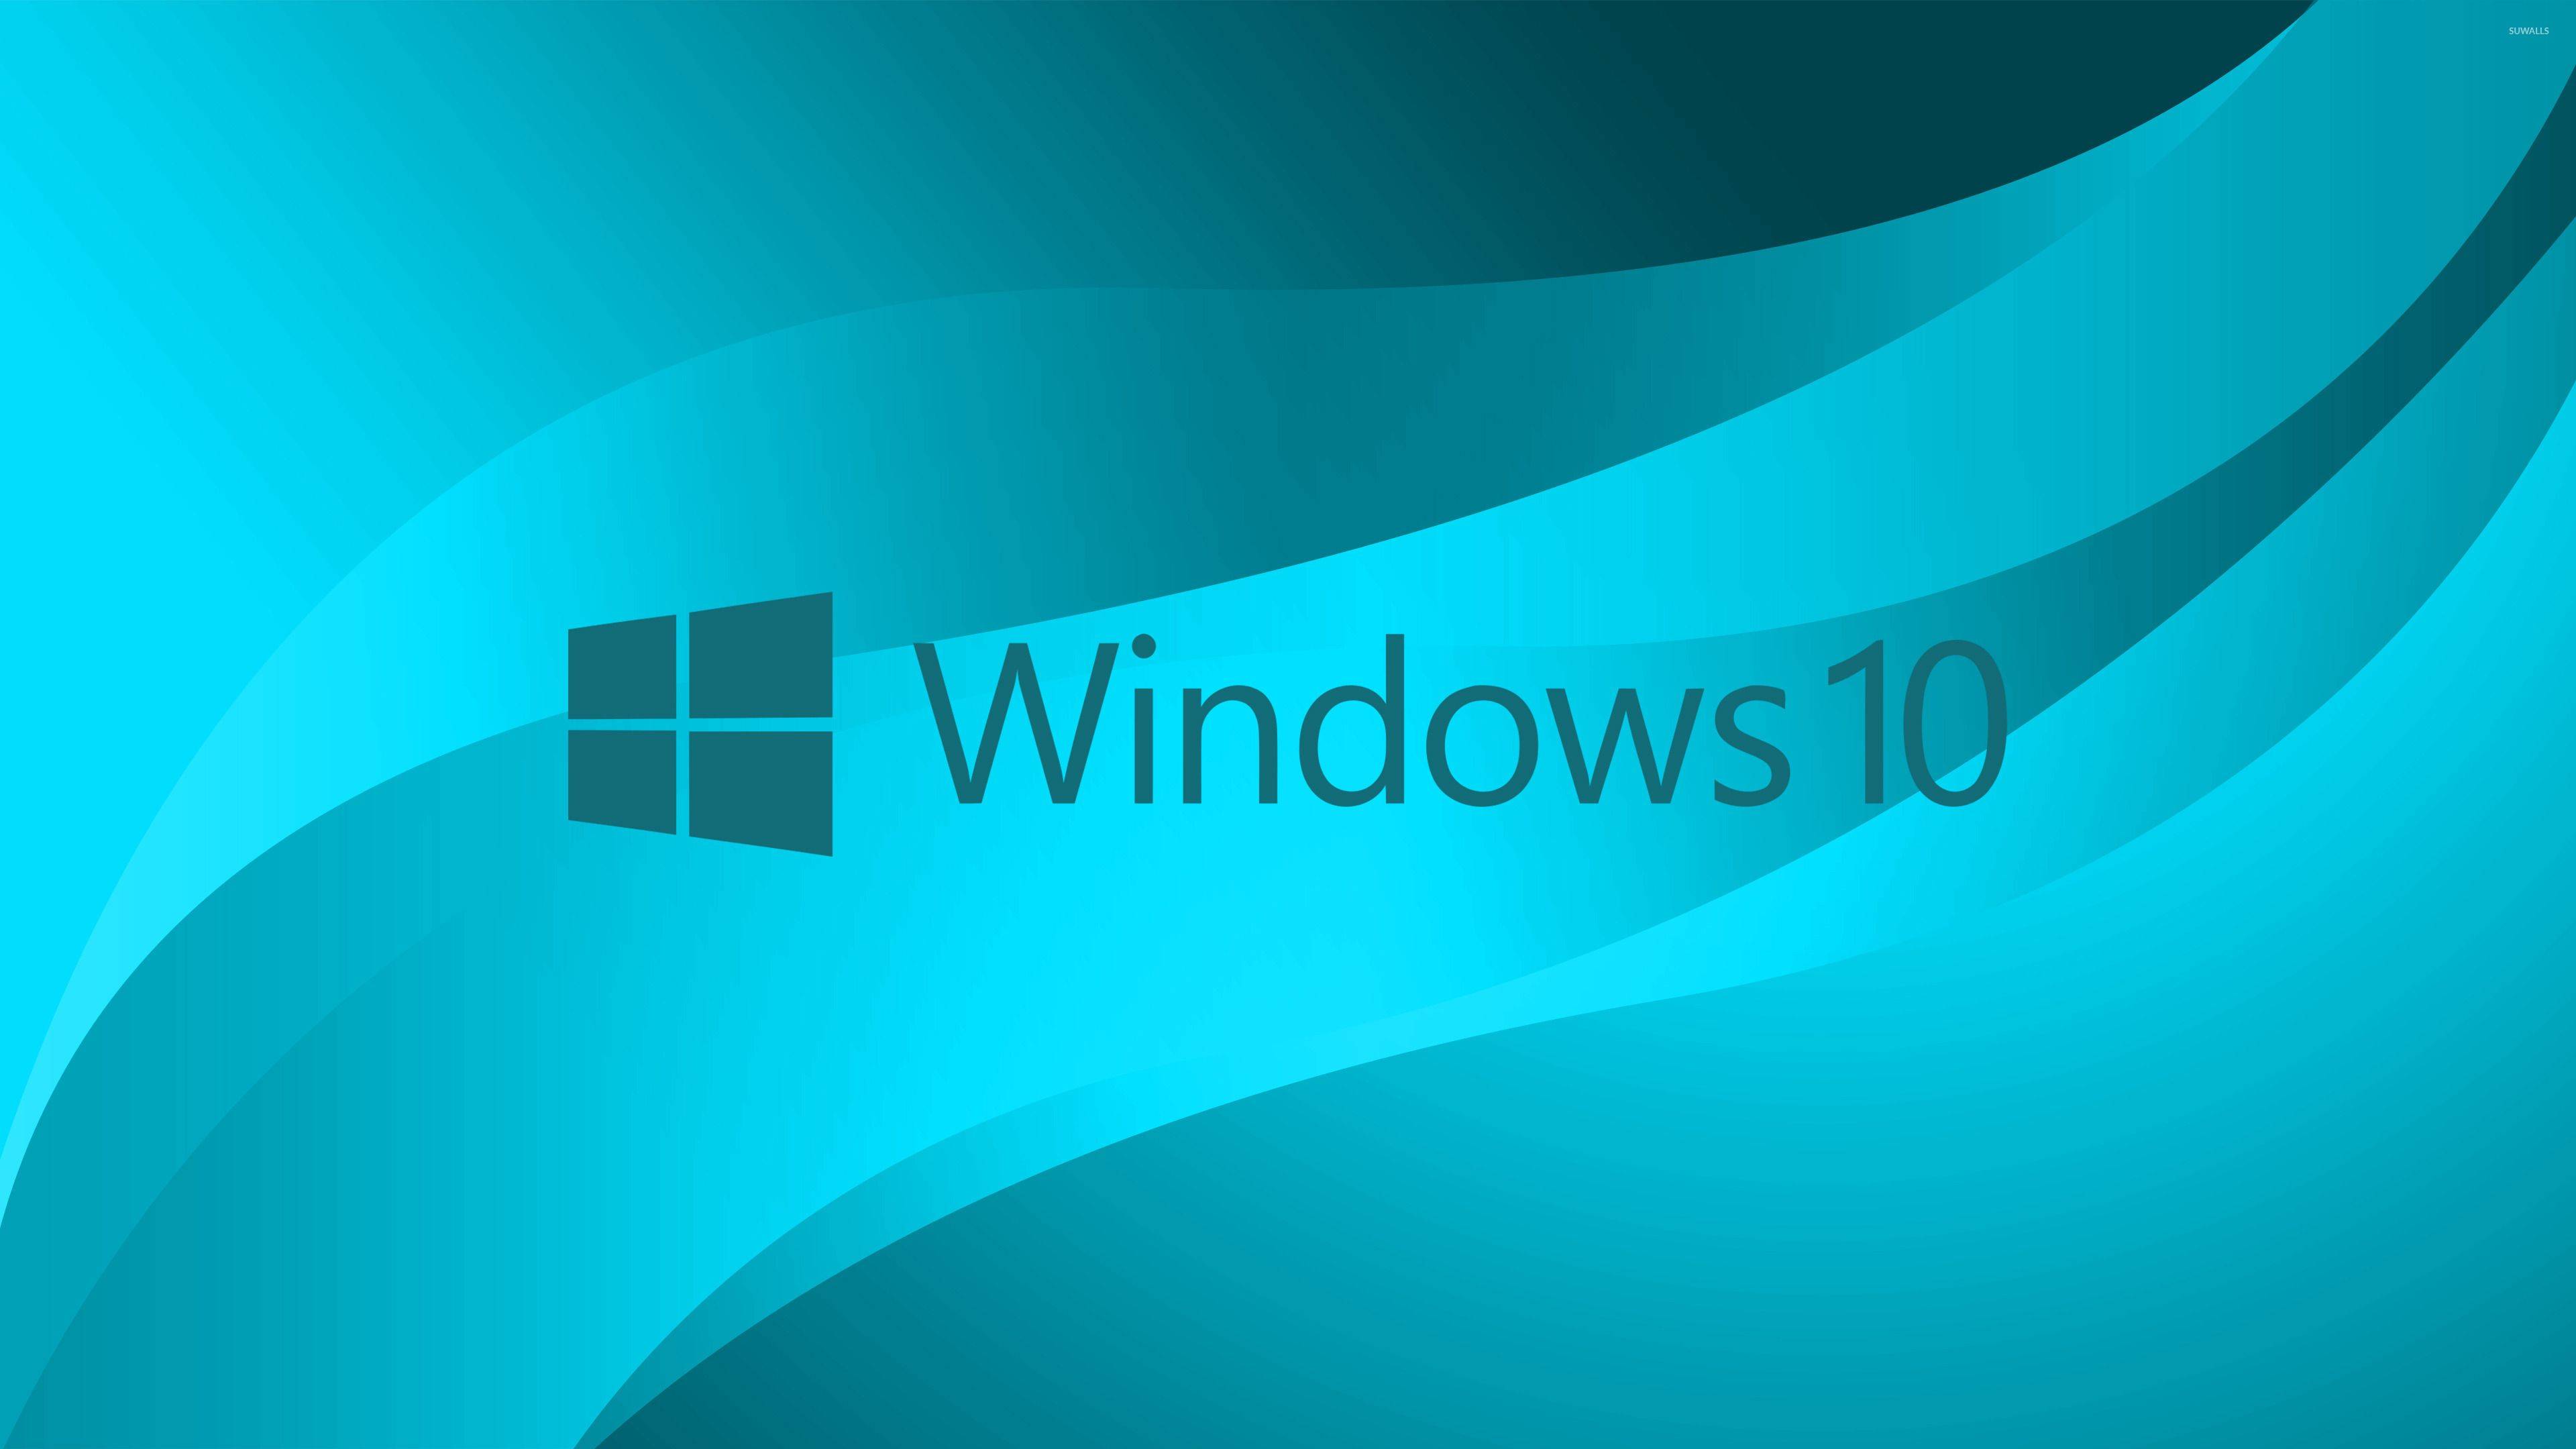 Windows-10-Wallpaper-56-3840x2160.jpg